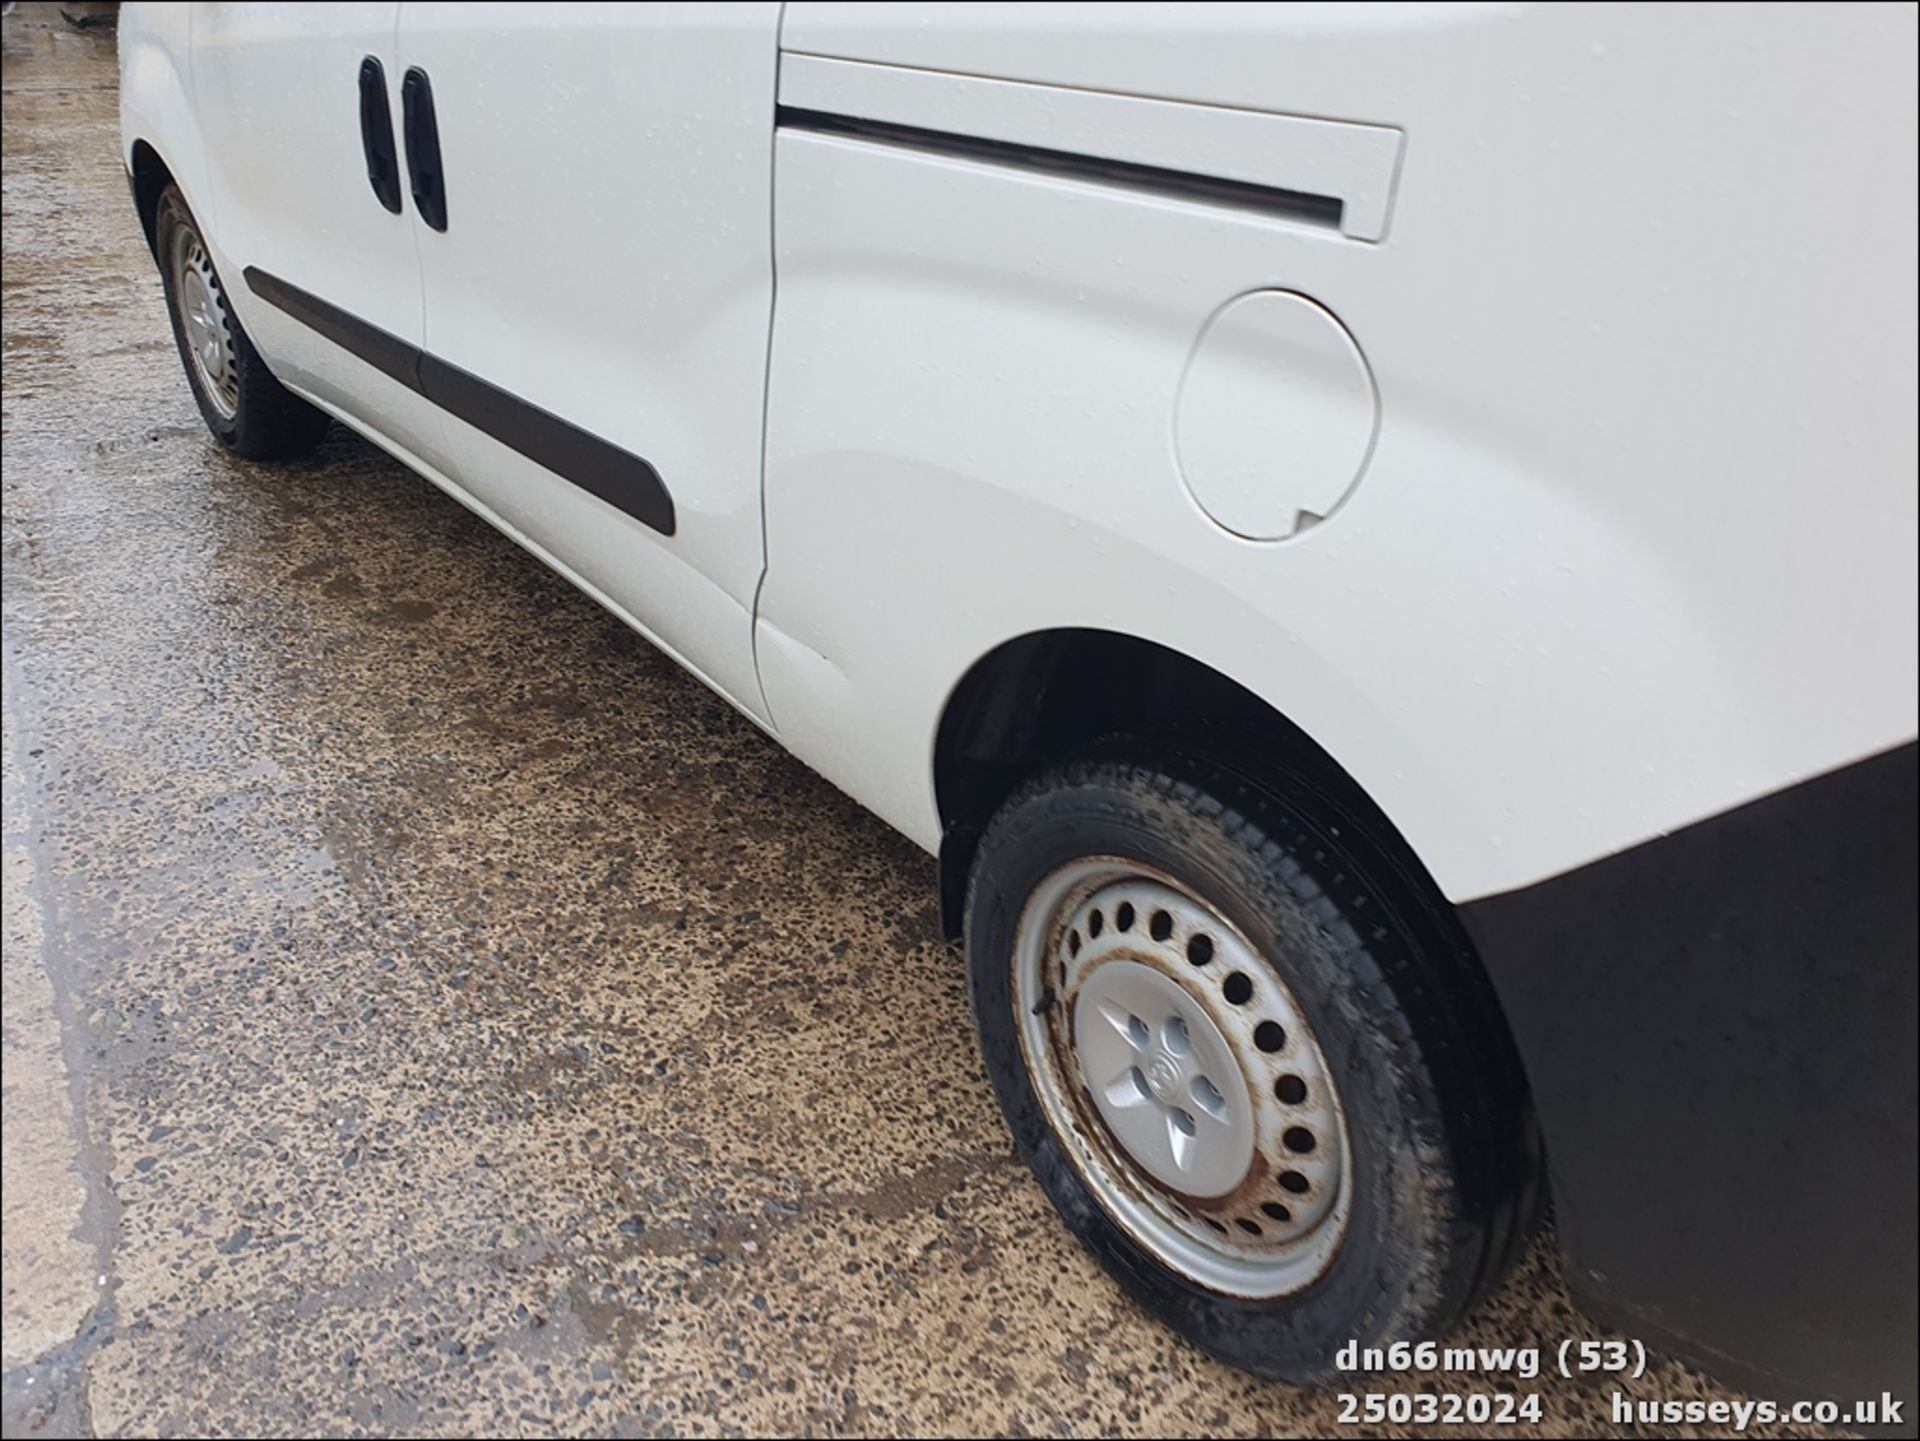 16/66 VAUXHALL COMBO 2300 CDTI ECOFLEX S - 1248cc 6dr Van (White, 85k) - Image 54 of 60